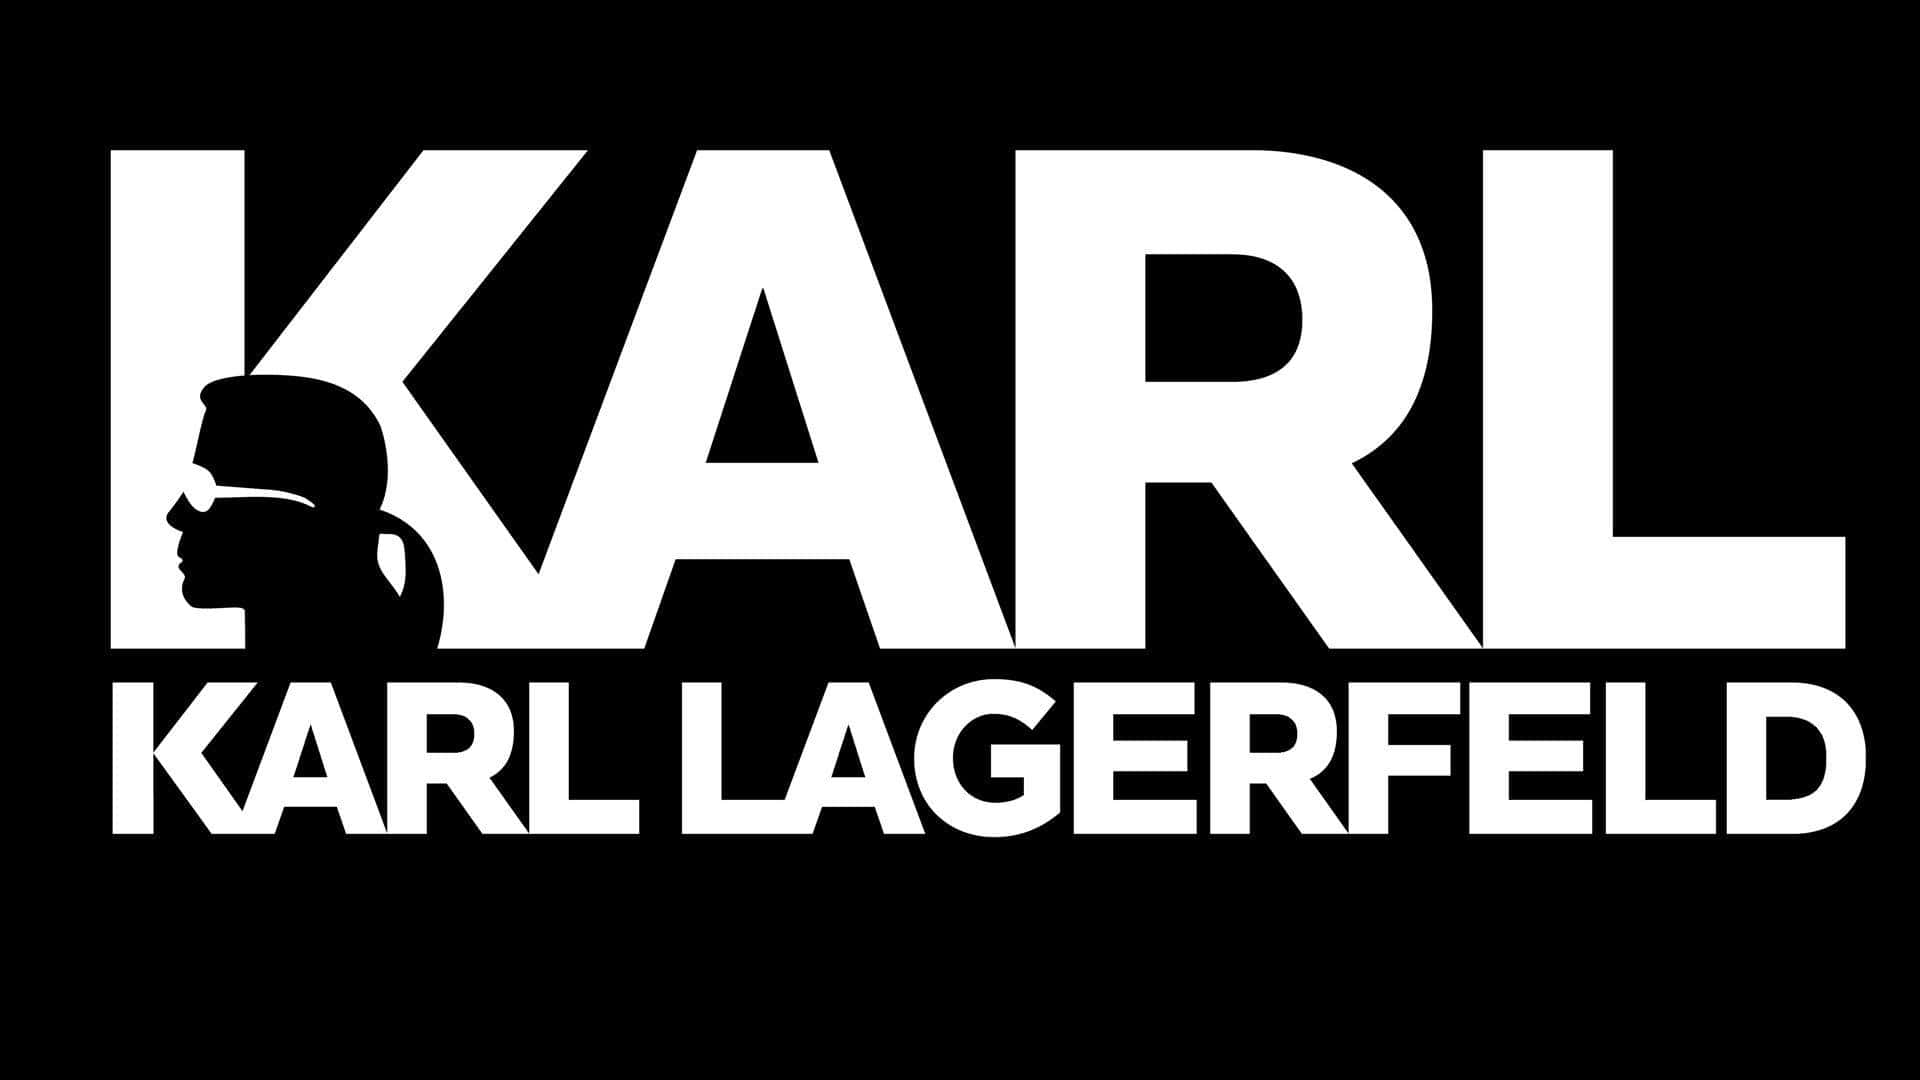 How to draw Karl Lagerfeld Cat logo 